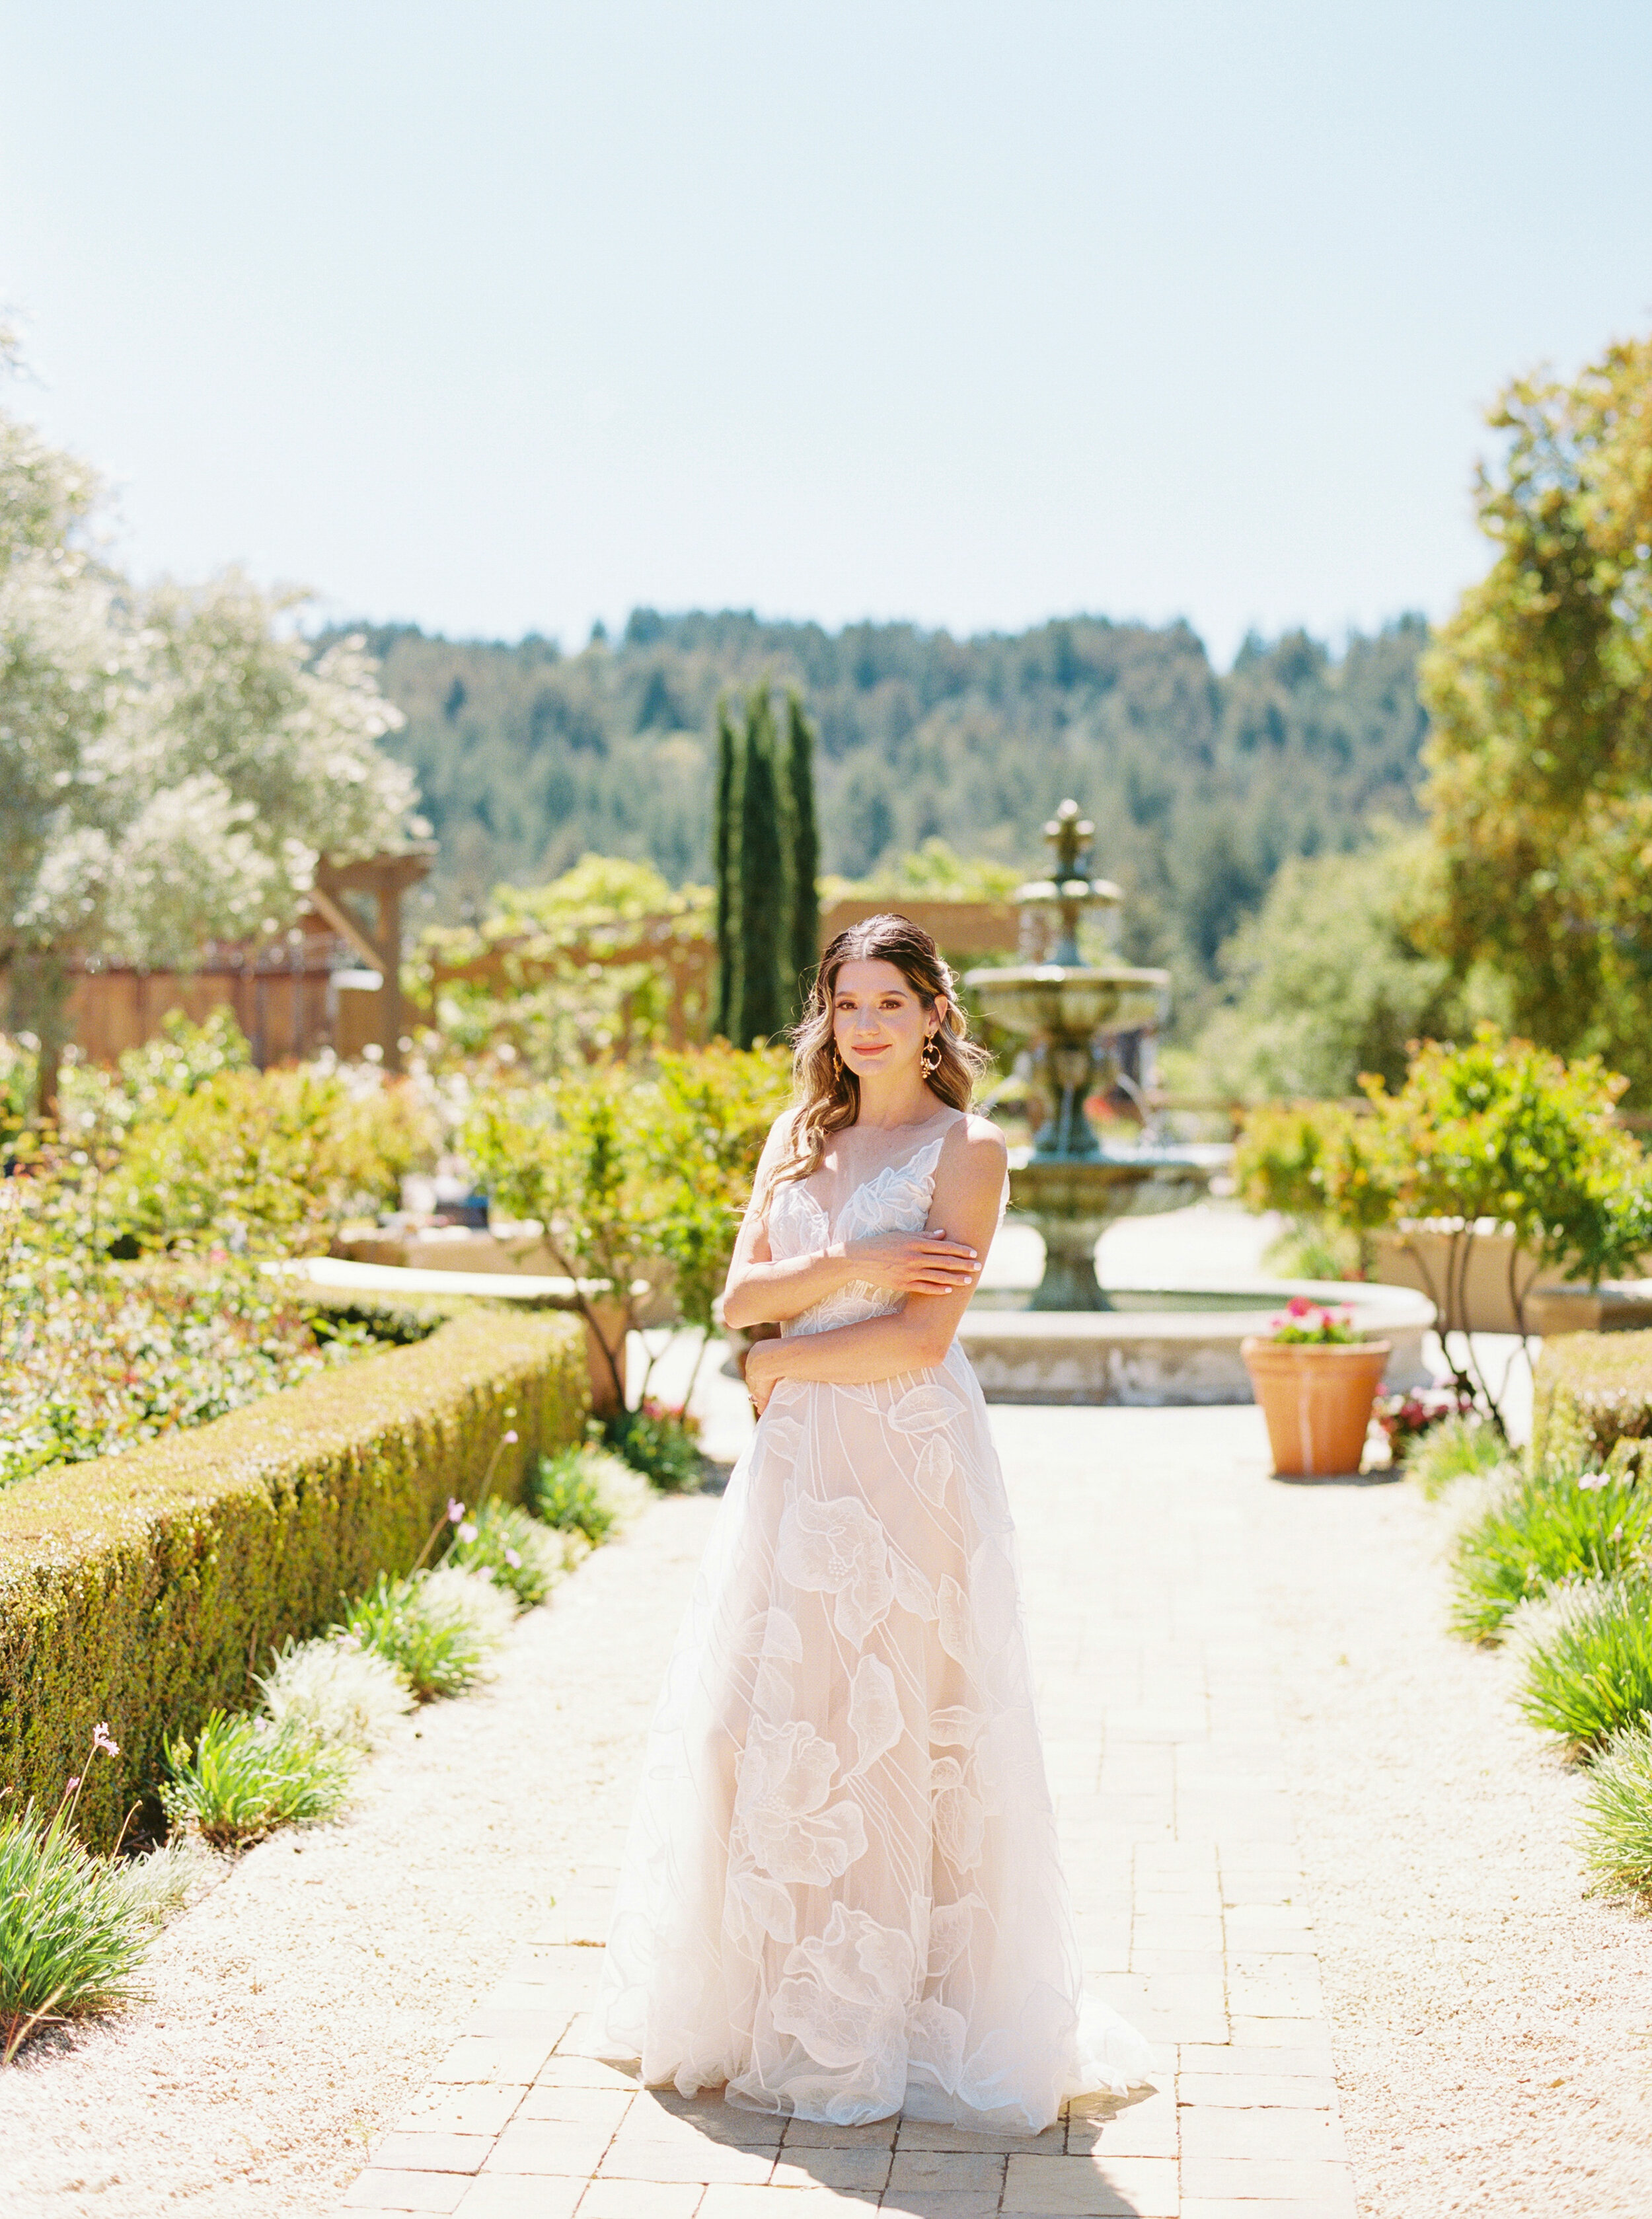 Regale Winery and Vineyards Wedding - Sarahi Hadden Photography-453.jpg